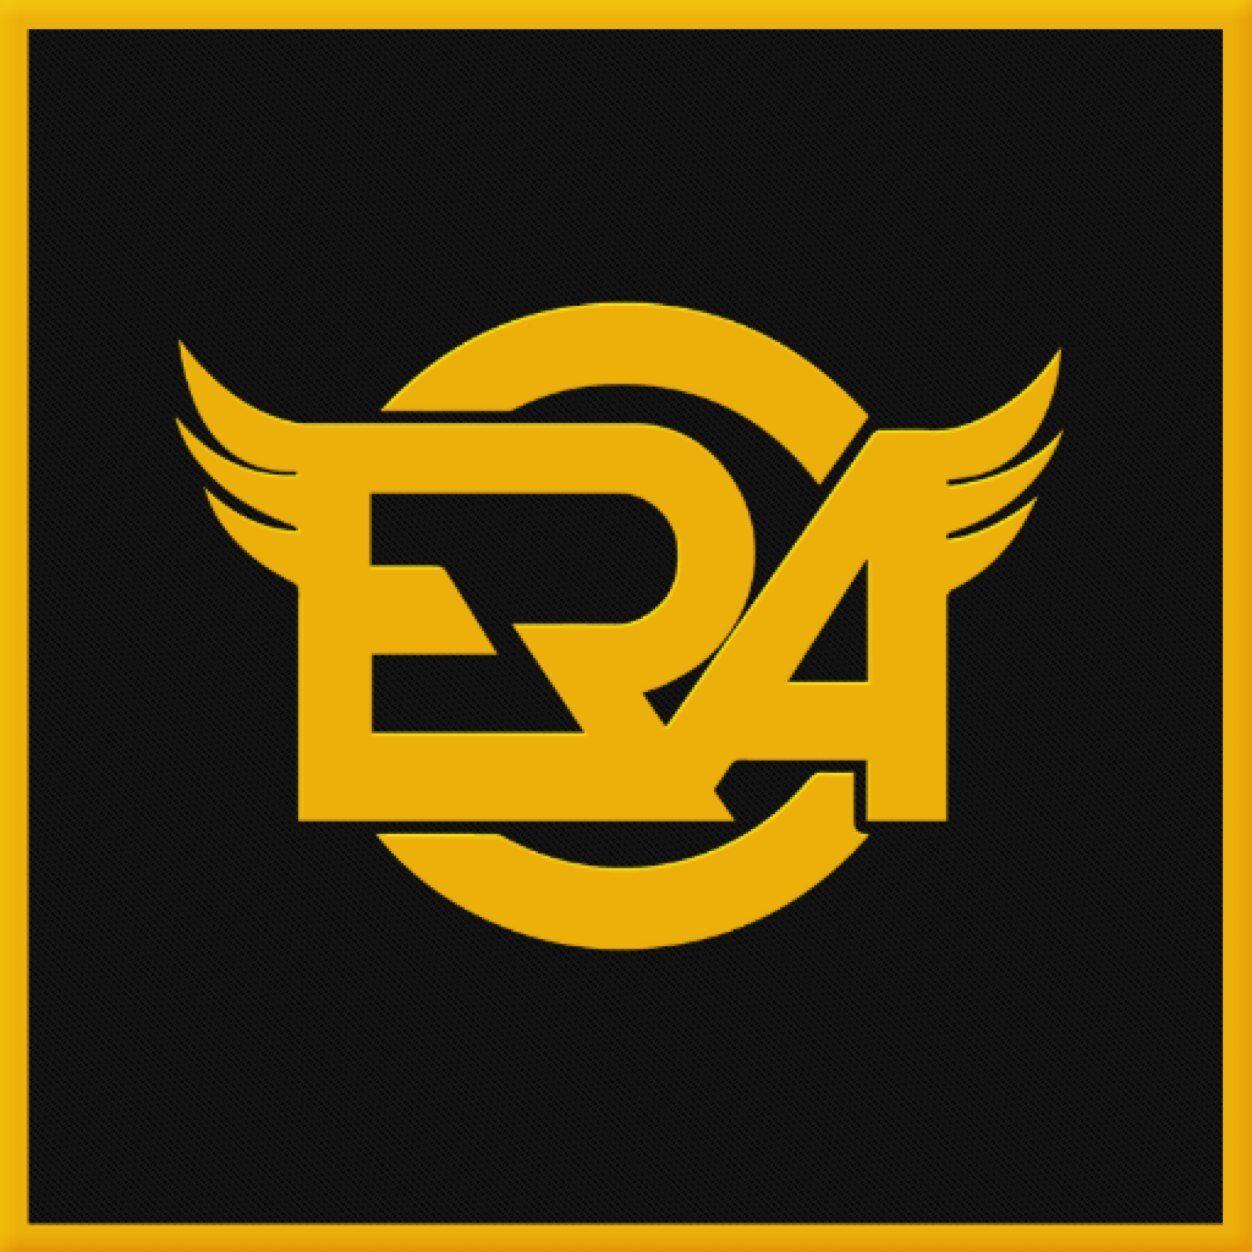 Era Clan Logo - eRa #ETERNITY we are making eRa a clearouting